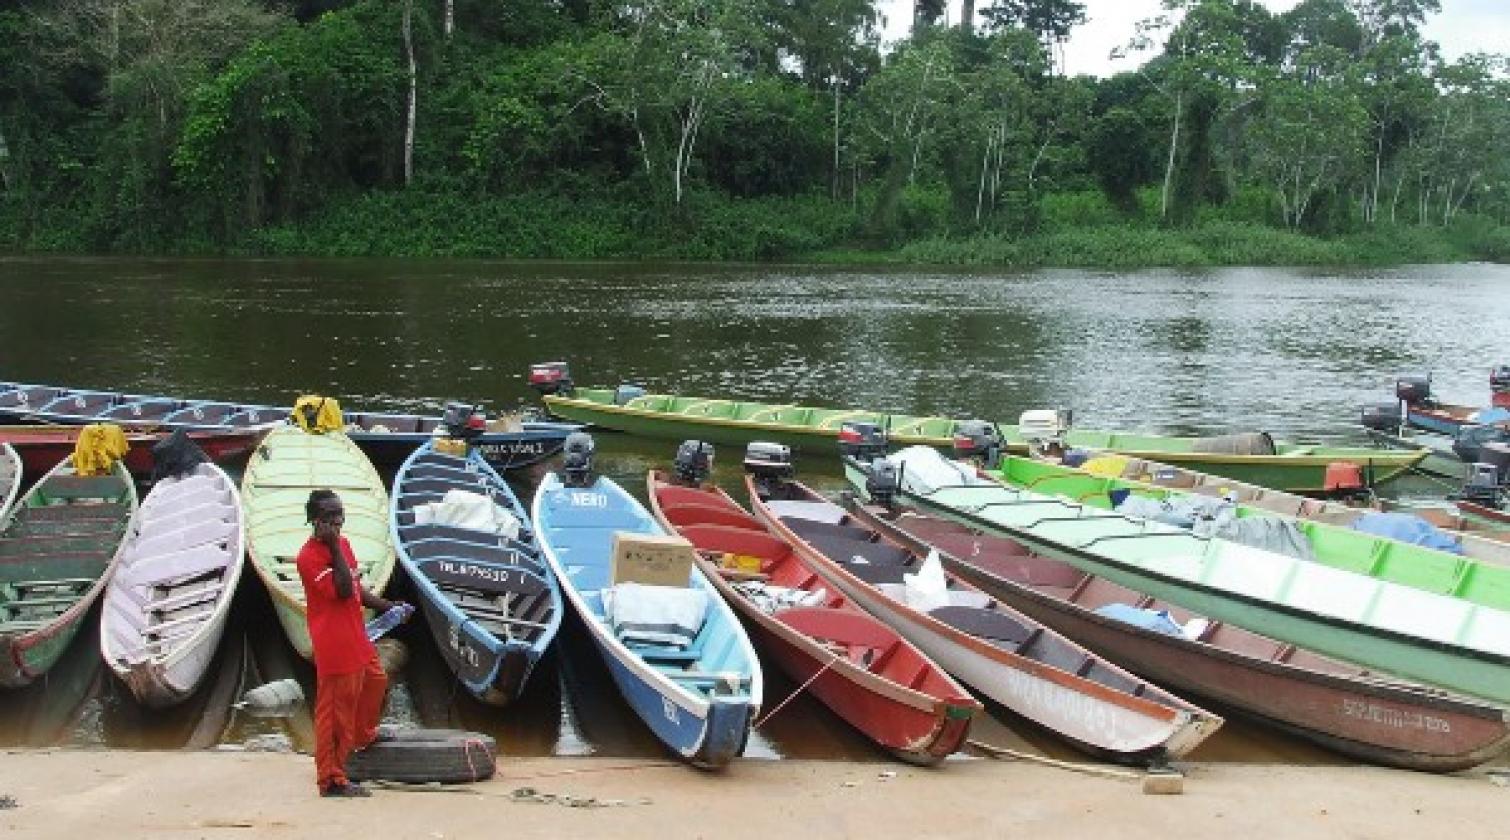 Foto (kleur) vissersboten Suriname